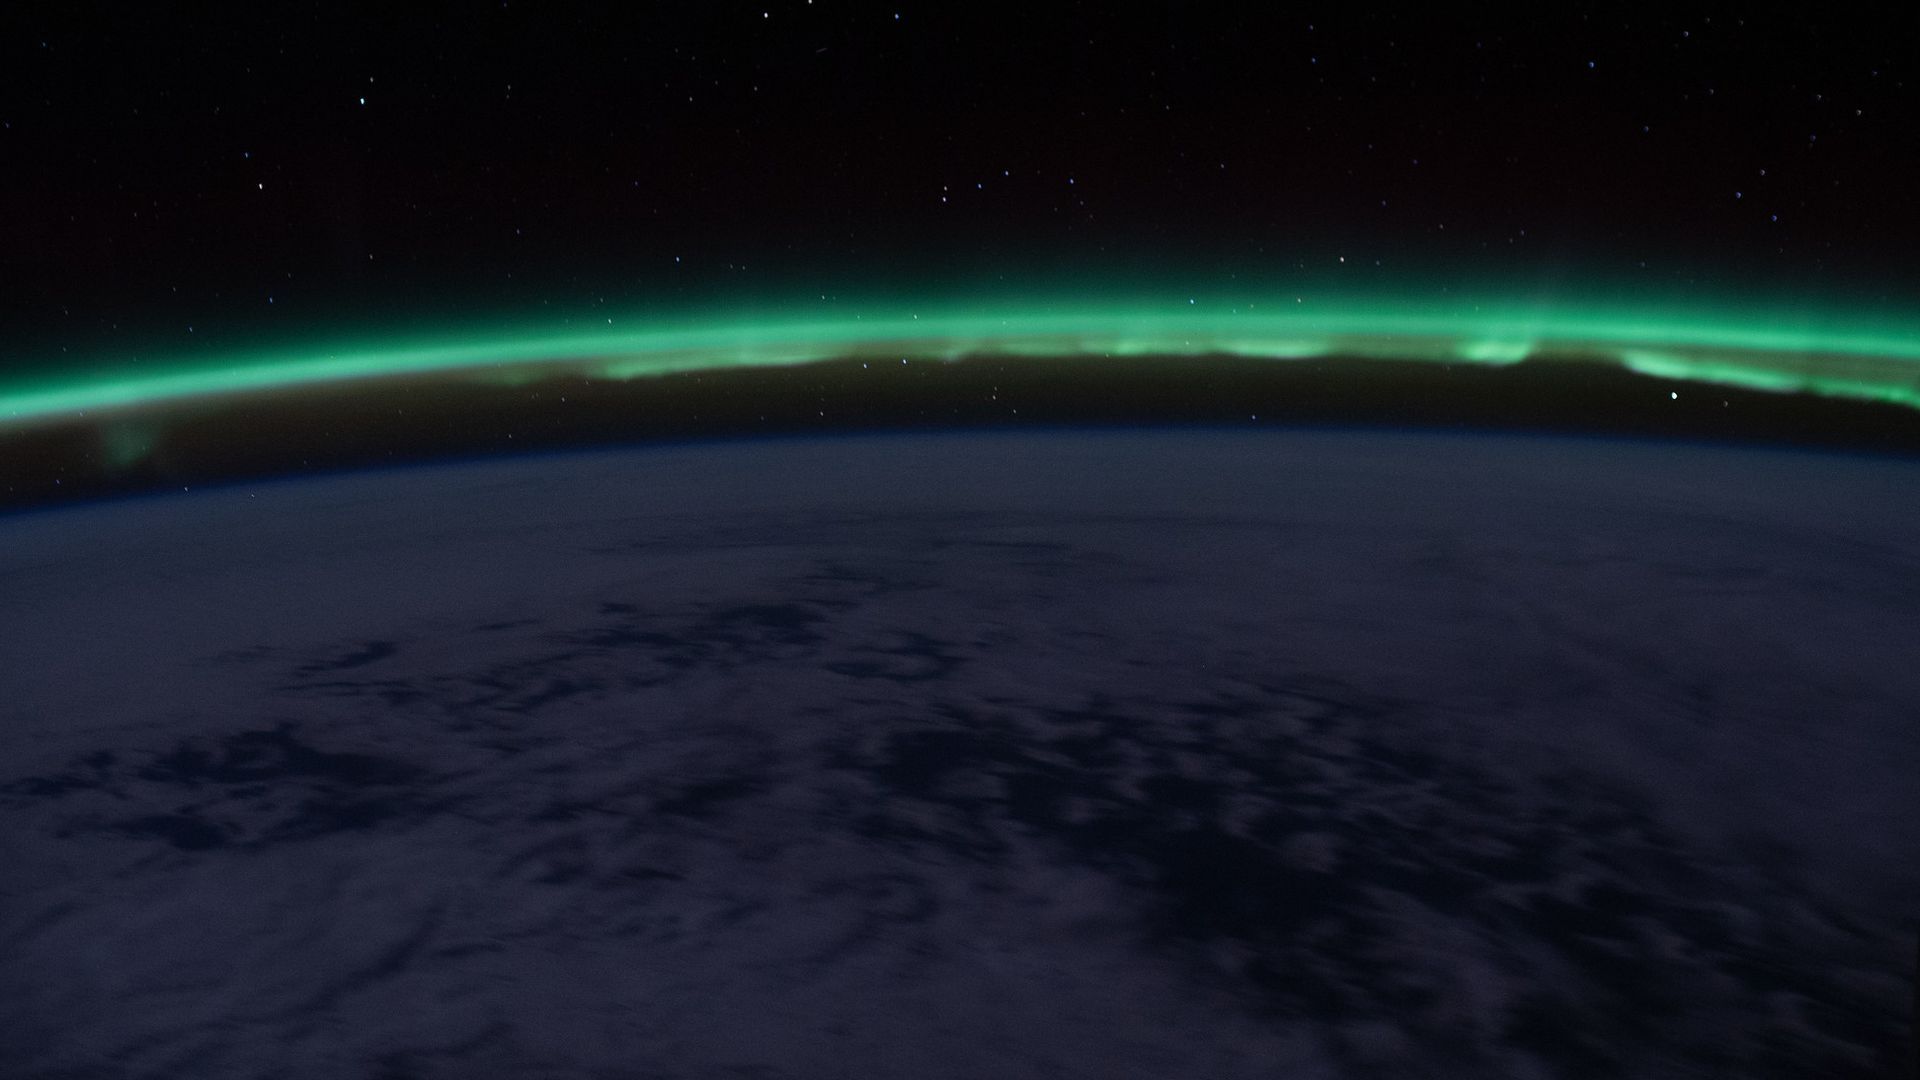 The aurora above Earth.